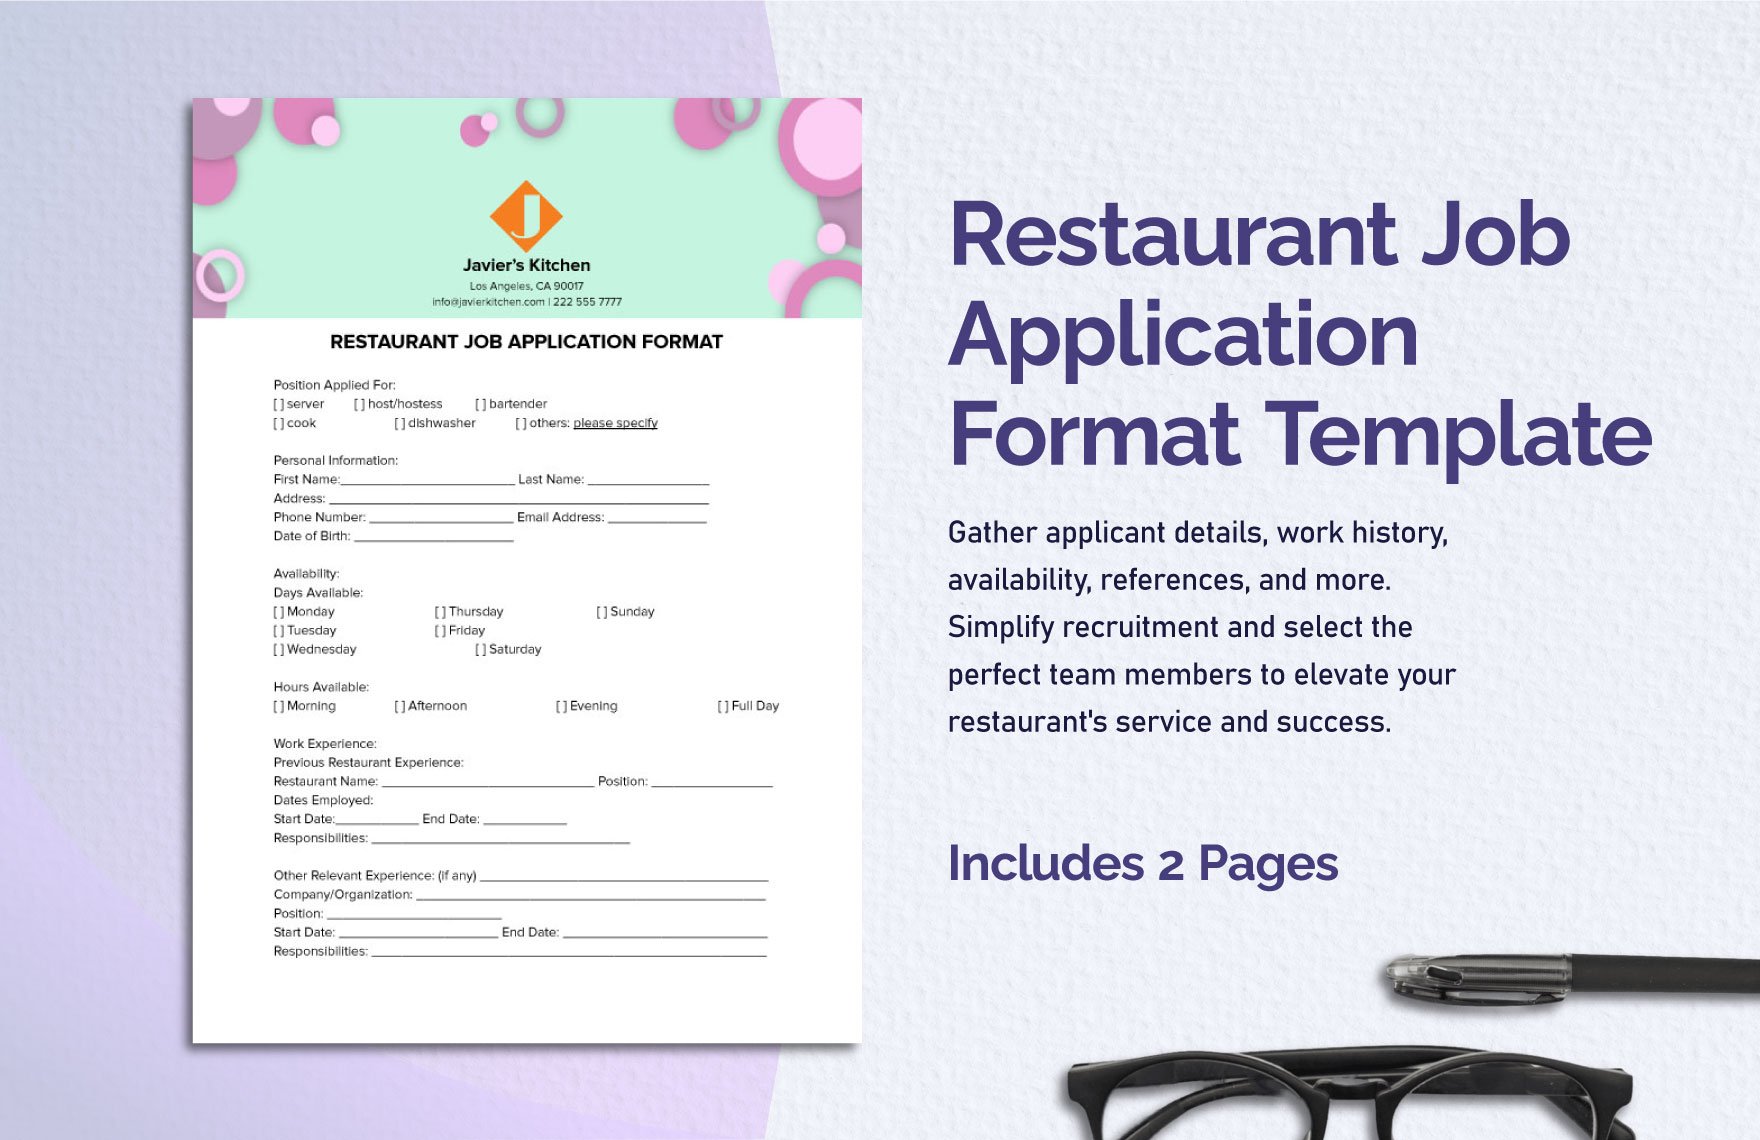 Restaurant Job Application Format Template